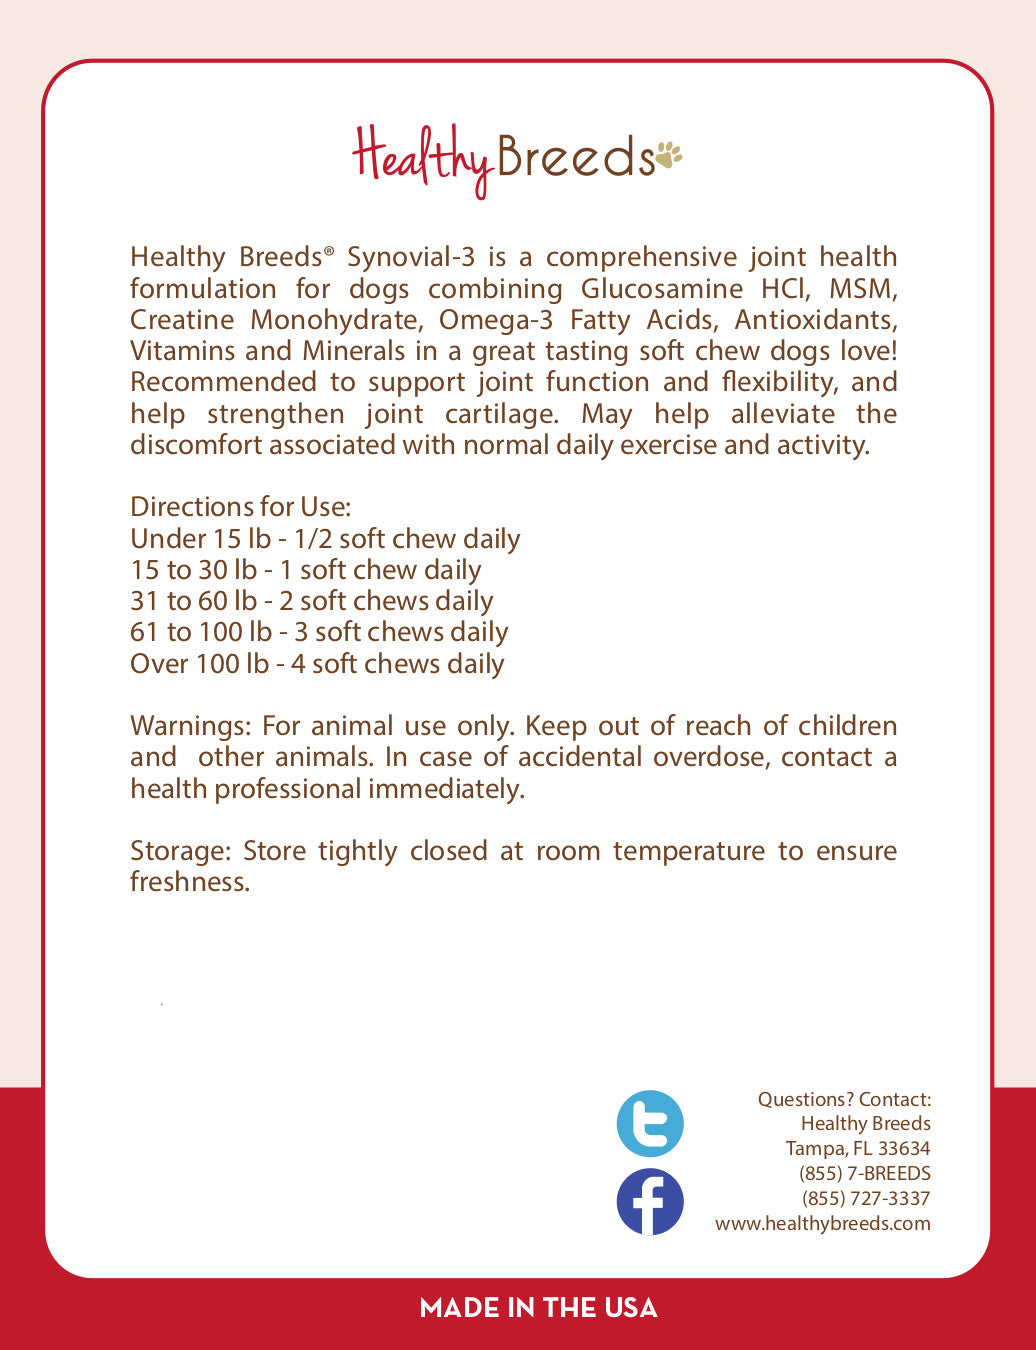 Scottish Deerhound Synovial-3 Joint Health Formulation Soft Chews 240 Count